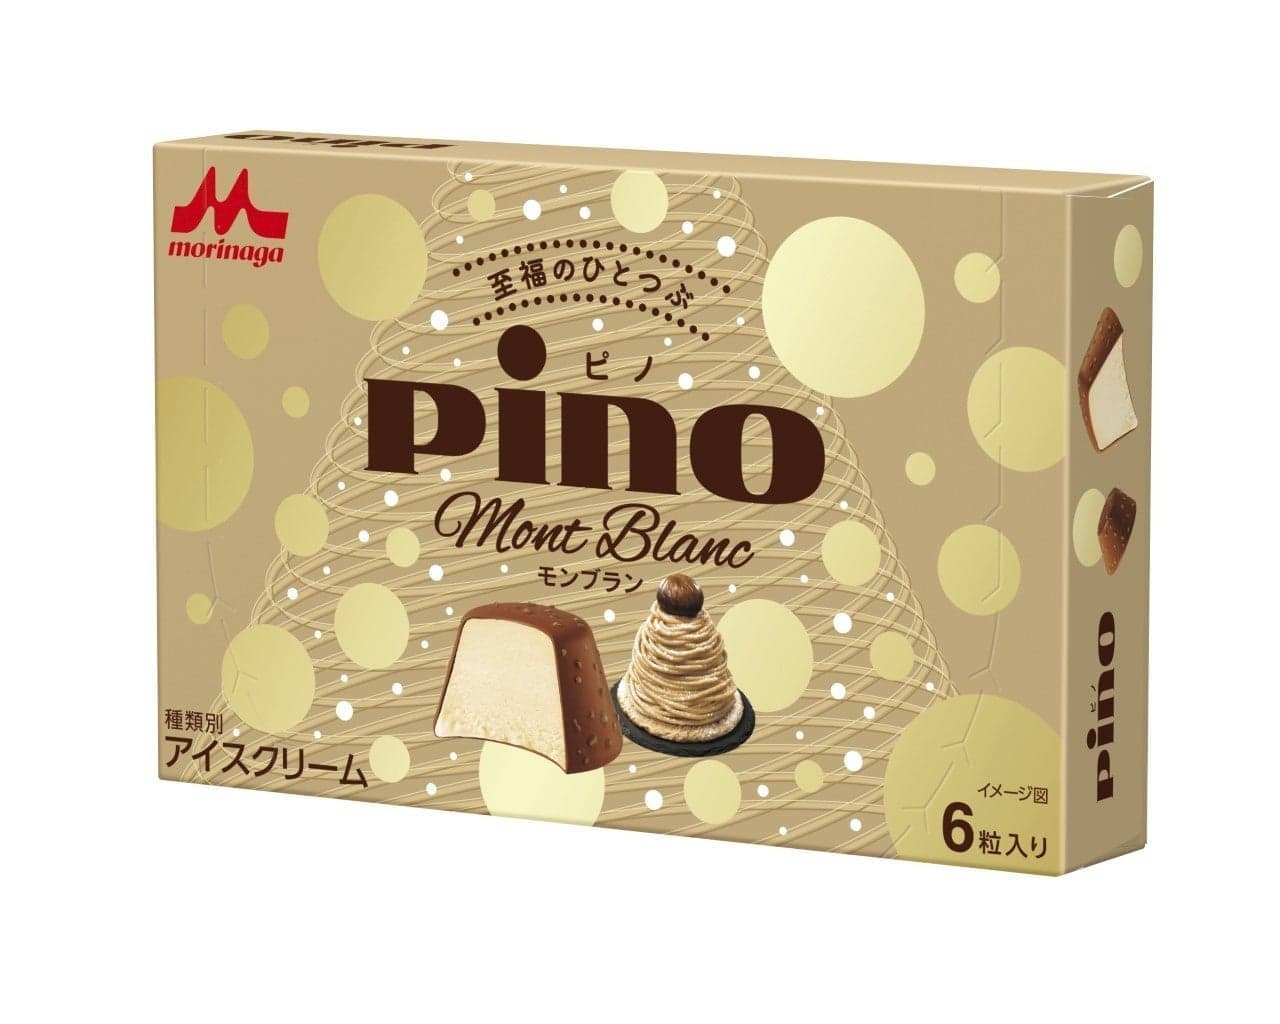 Morinaga Milk Industry "Pinot Mont Blanc